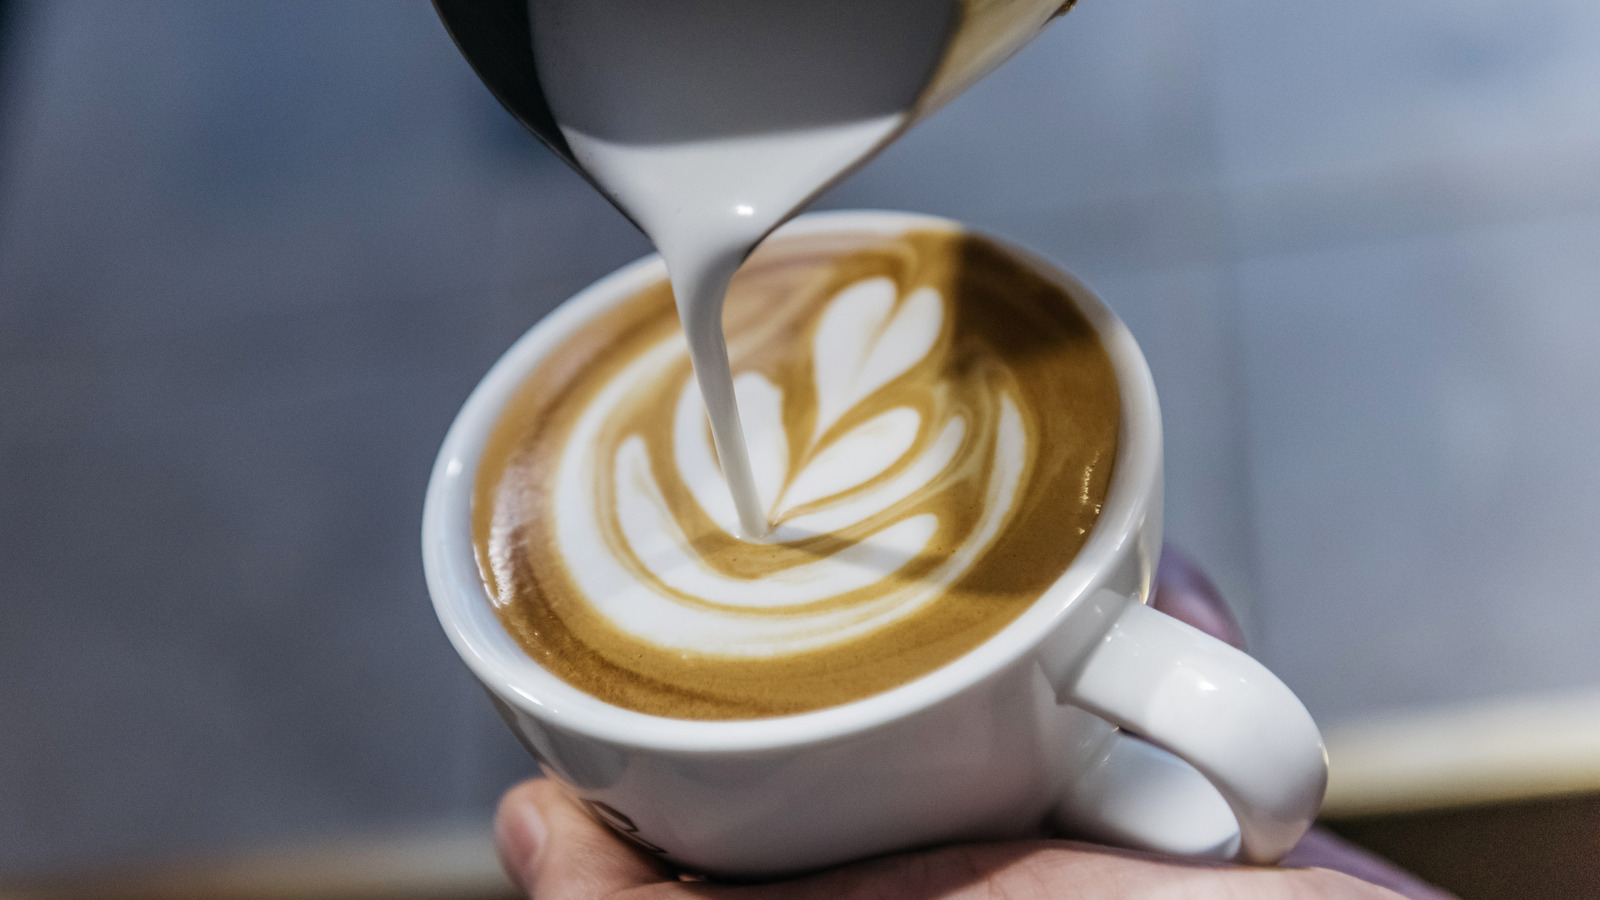 Latte art in one minute with NanoFoamer 